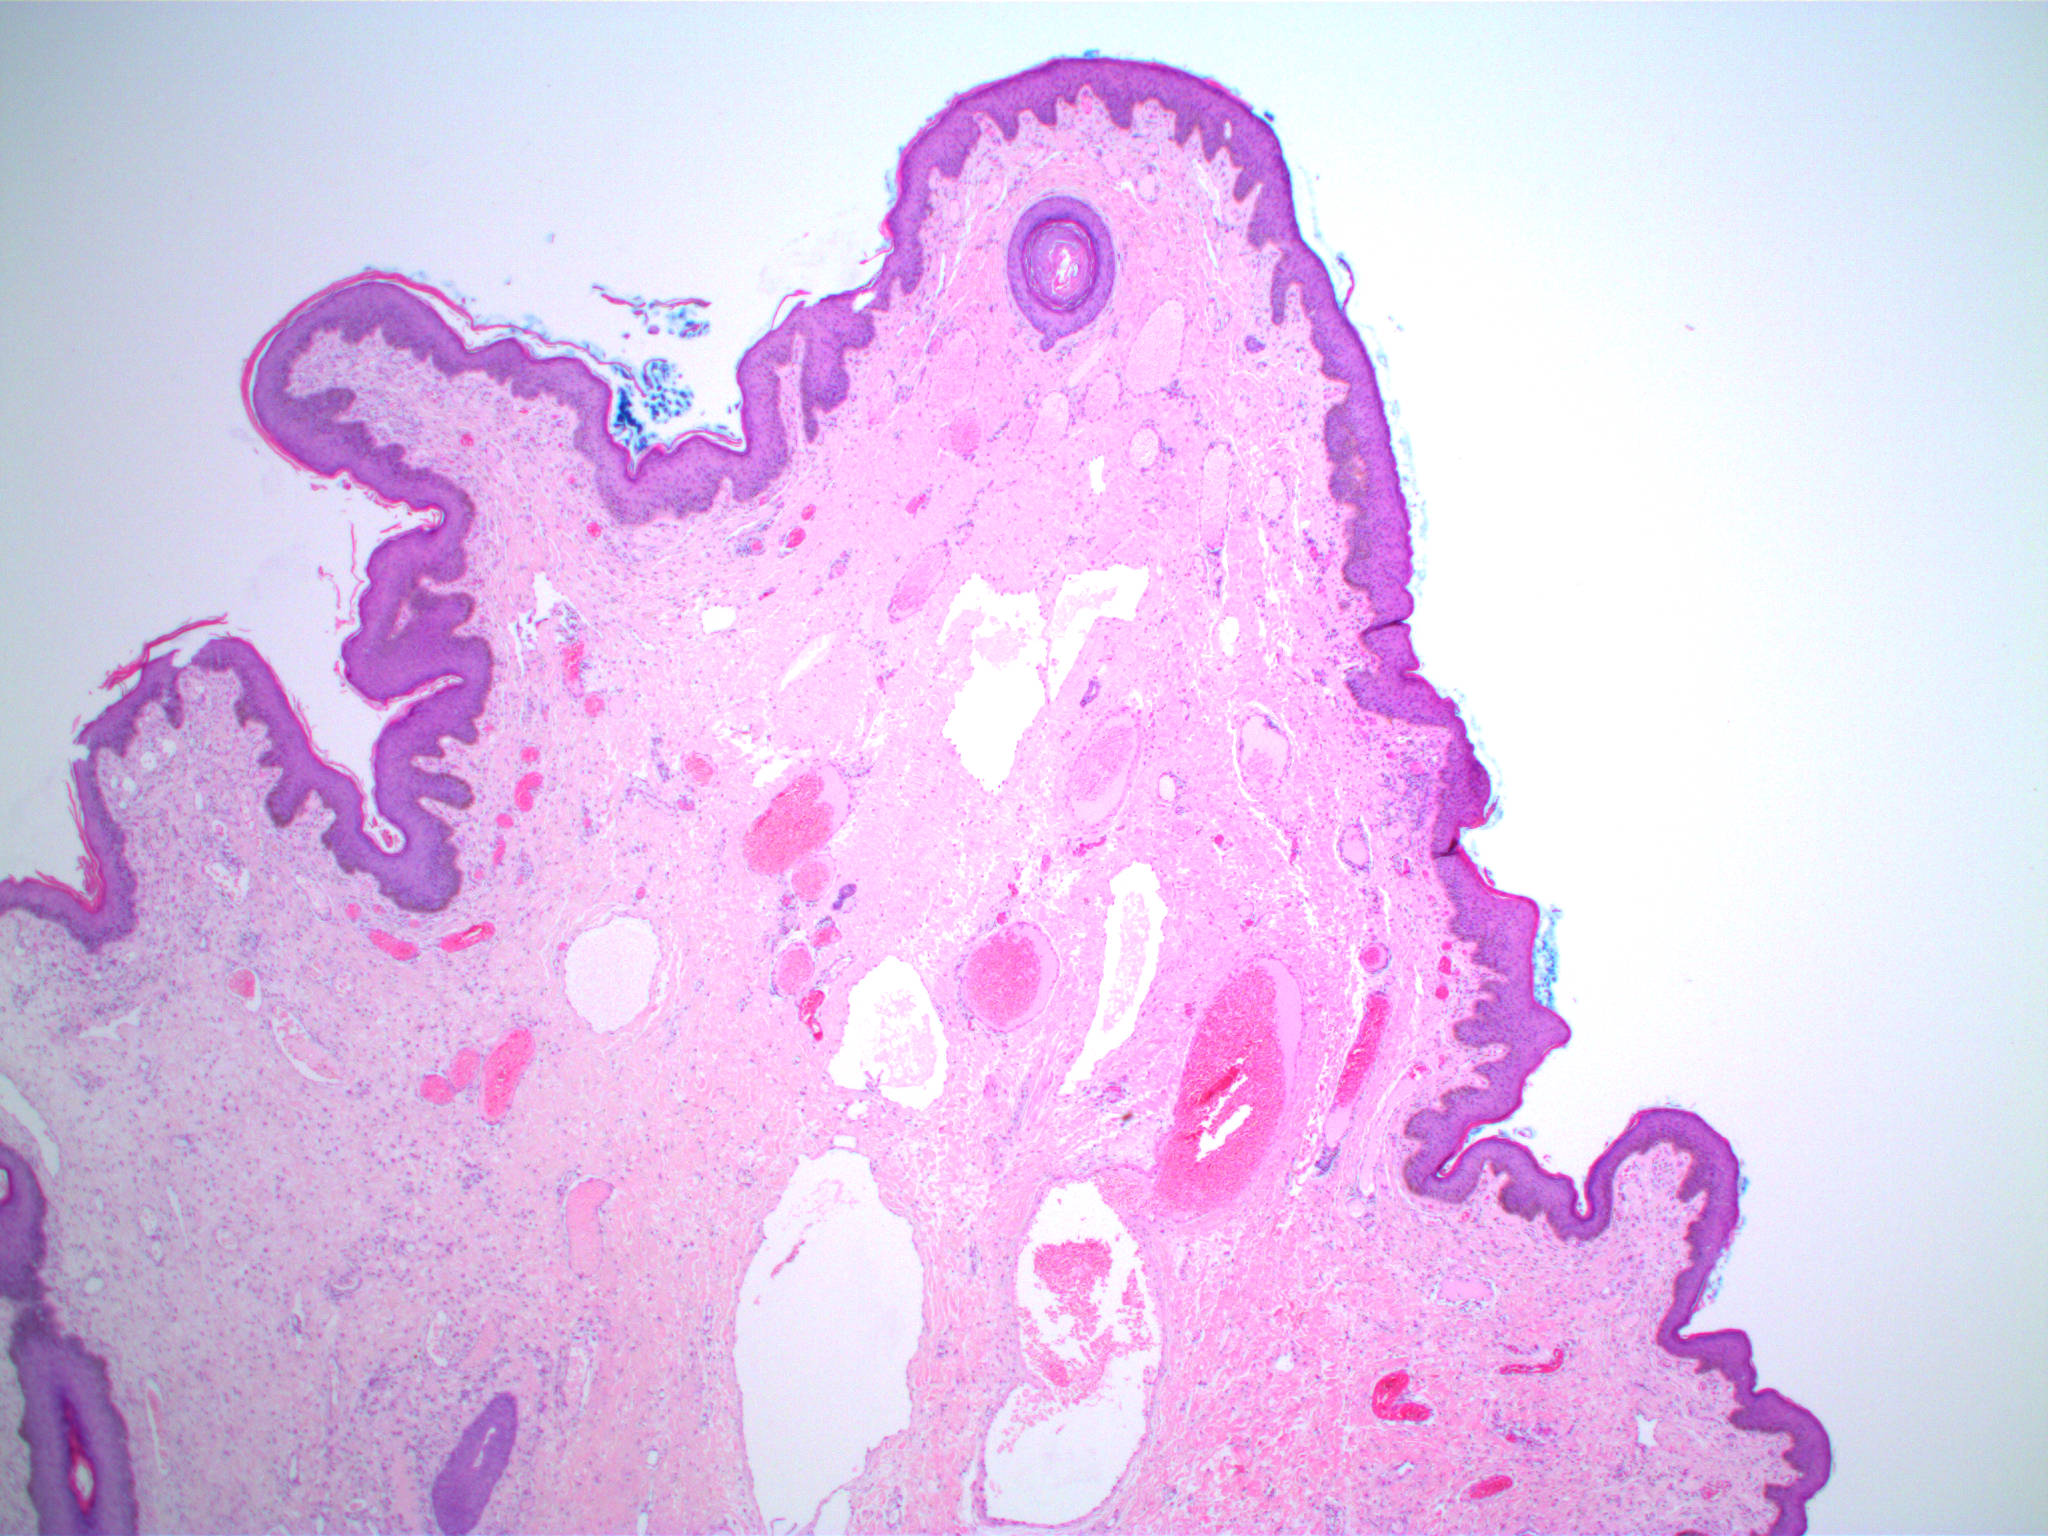 papilloma fibroepithelial)